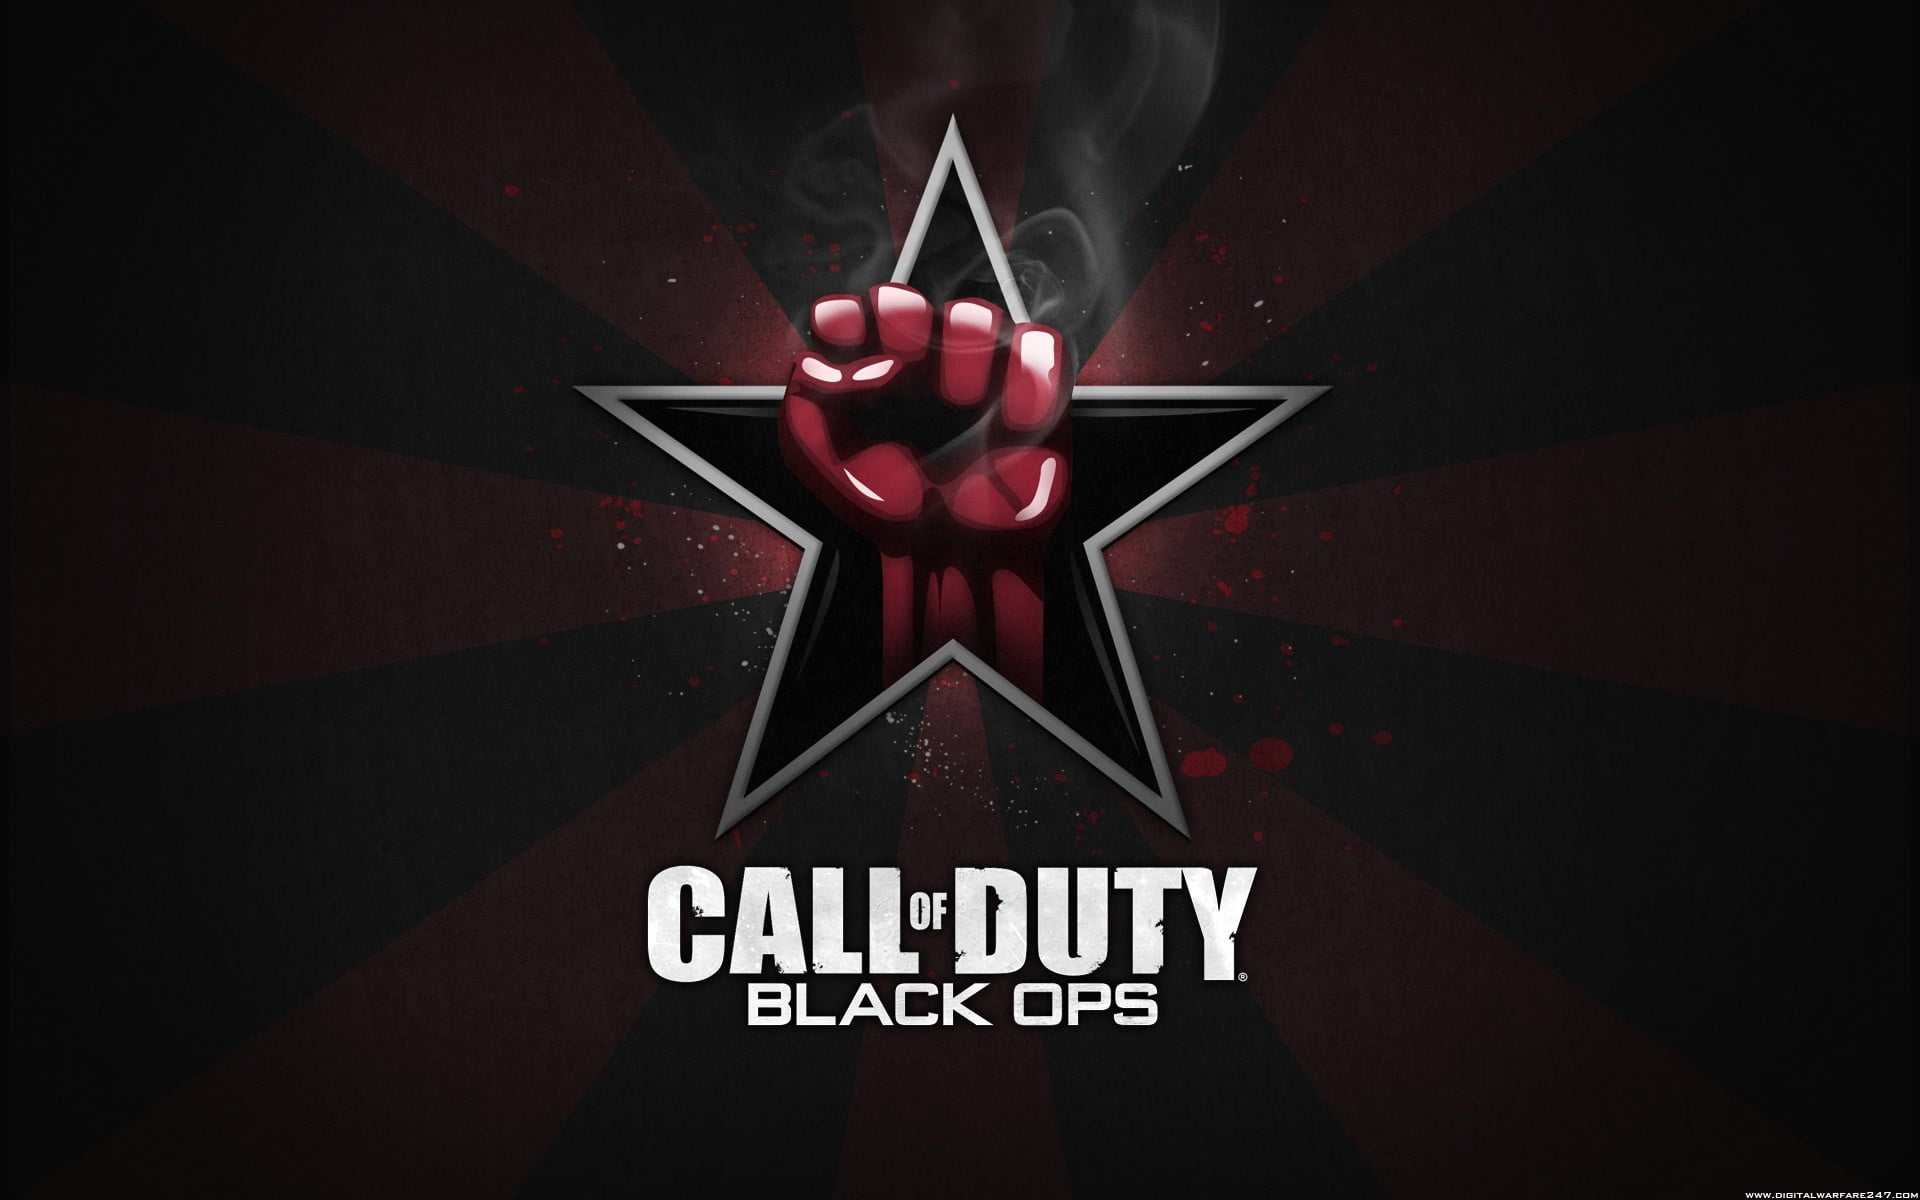 Call of Duty Black Ops digital wallpaper